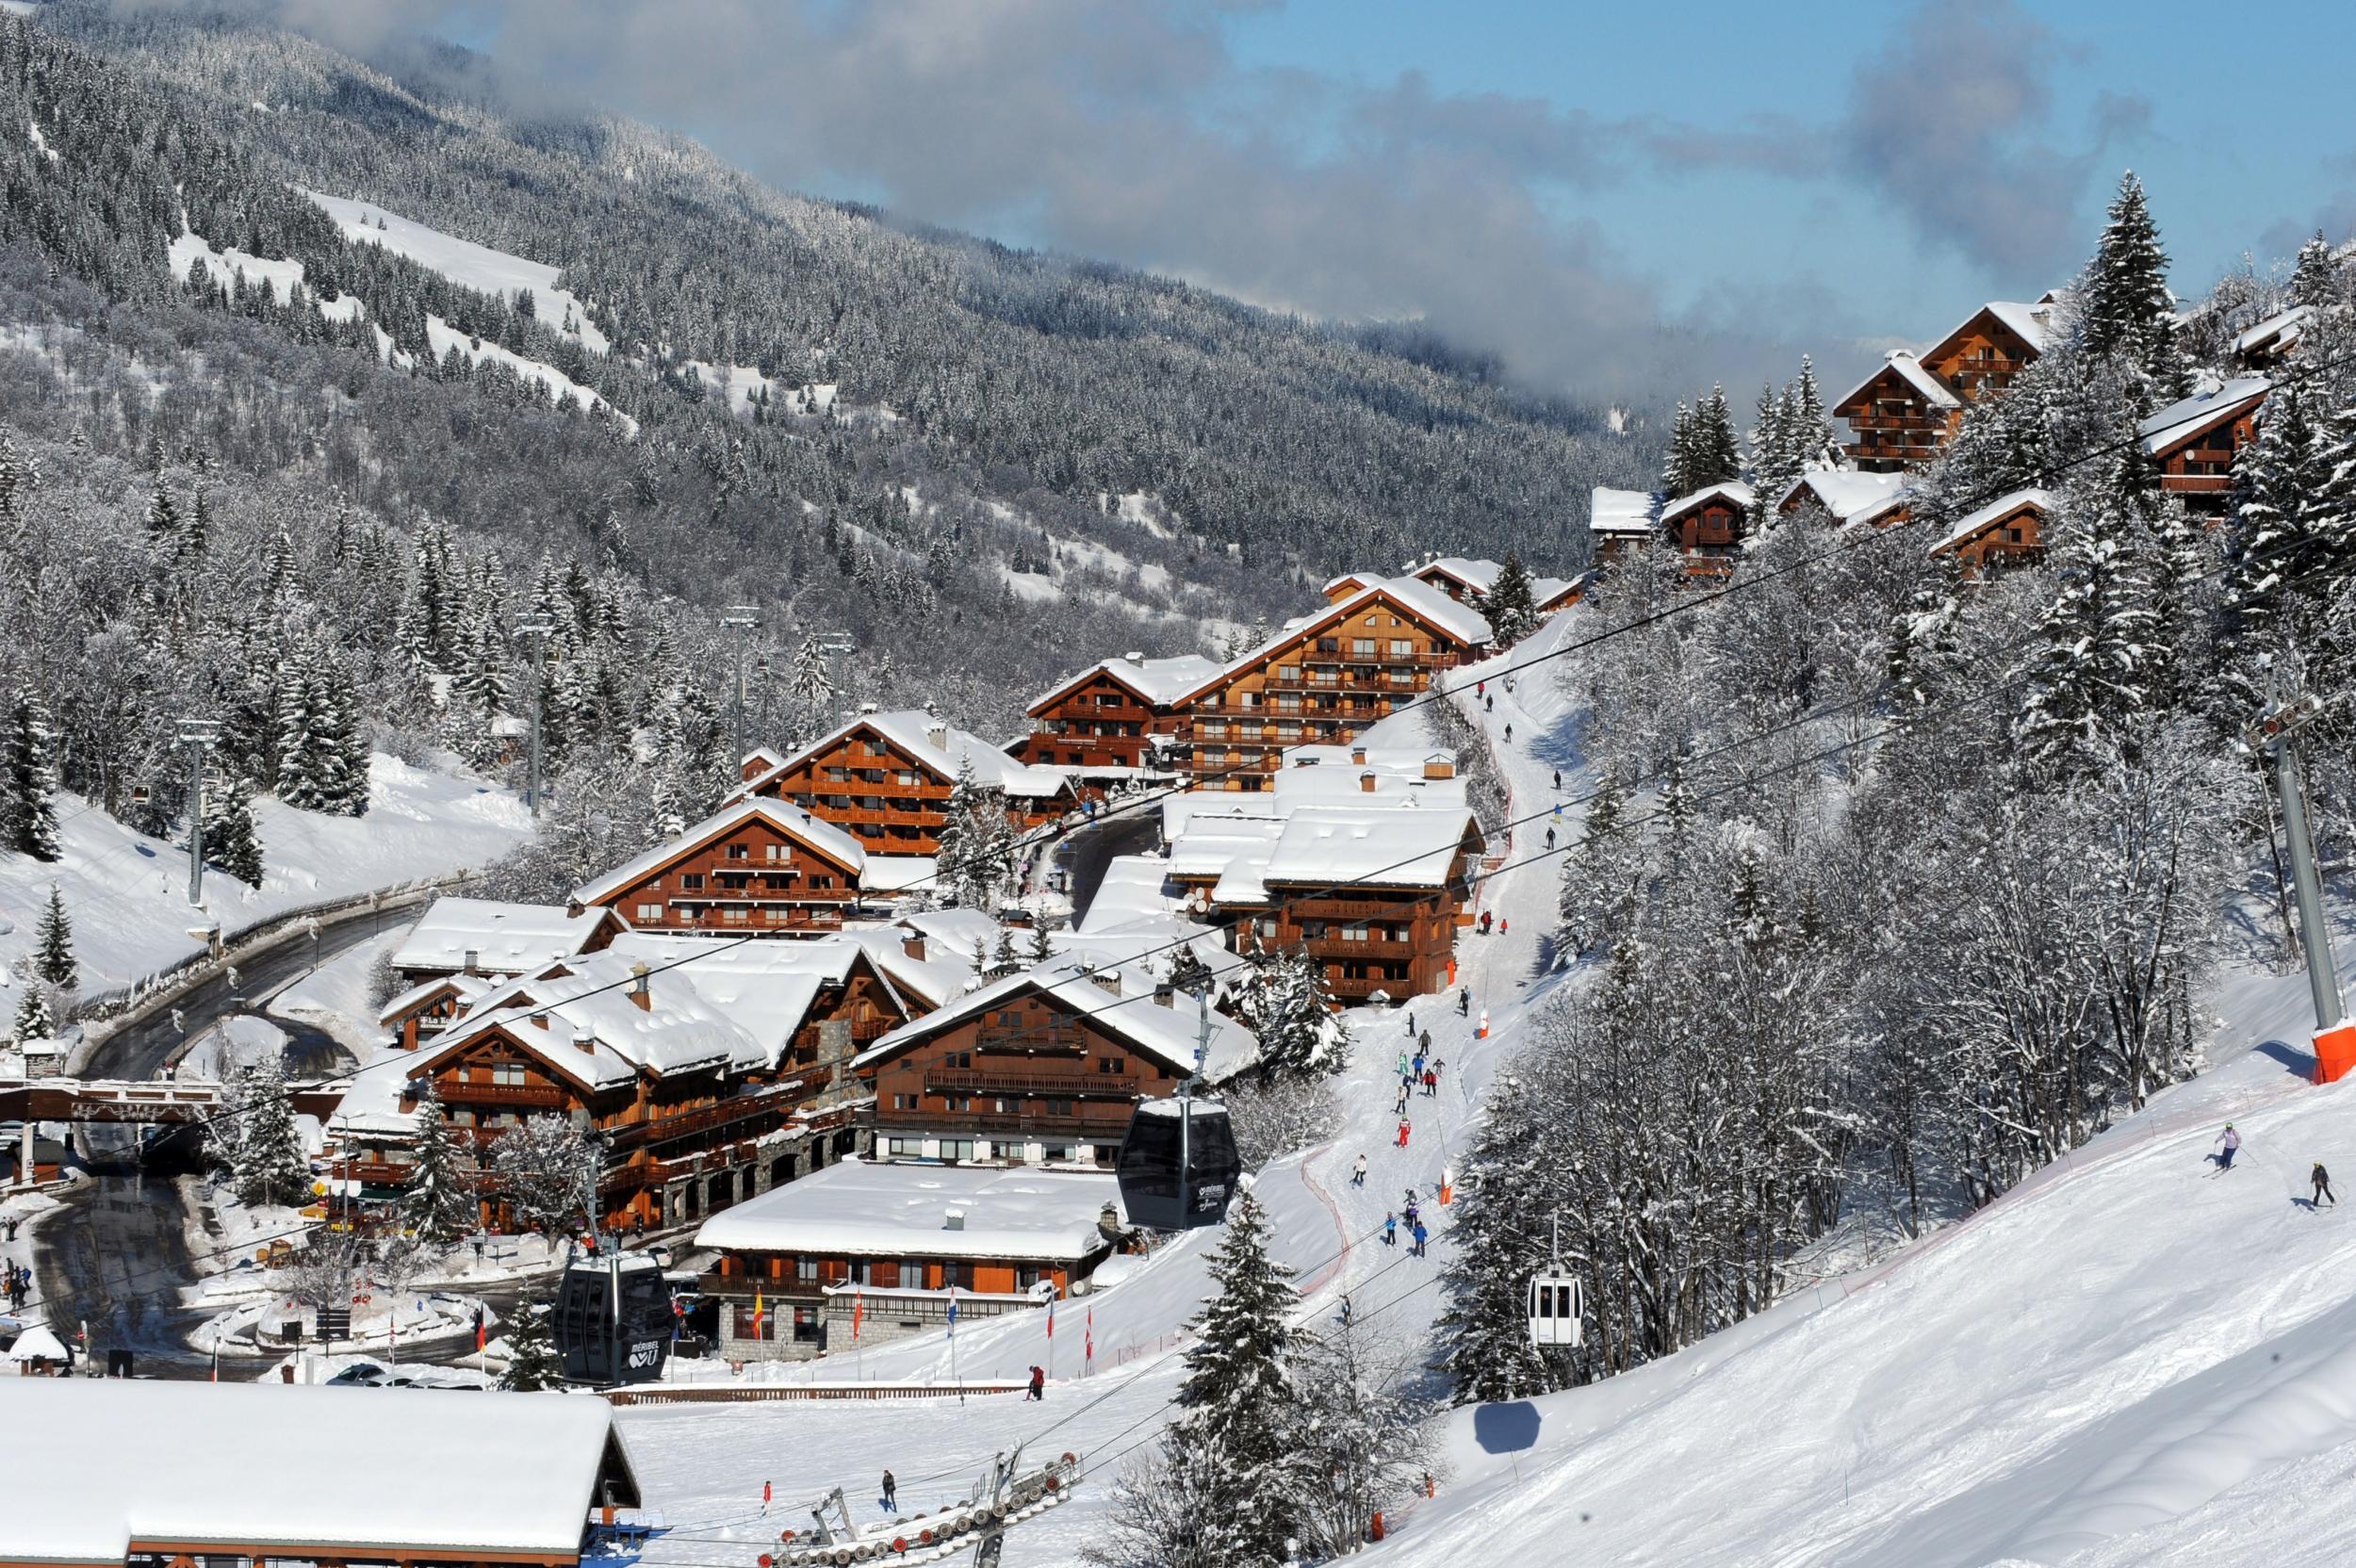 &#13;
The resort is a quintessential alpine ski destination (Getty)&#13;